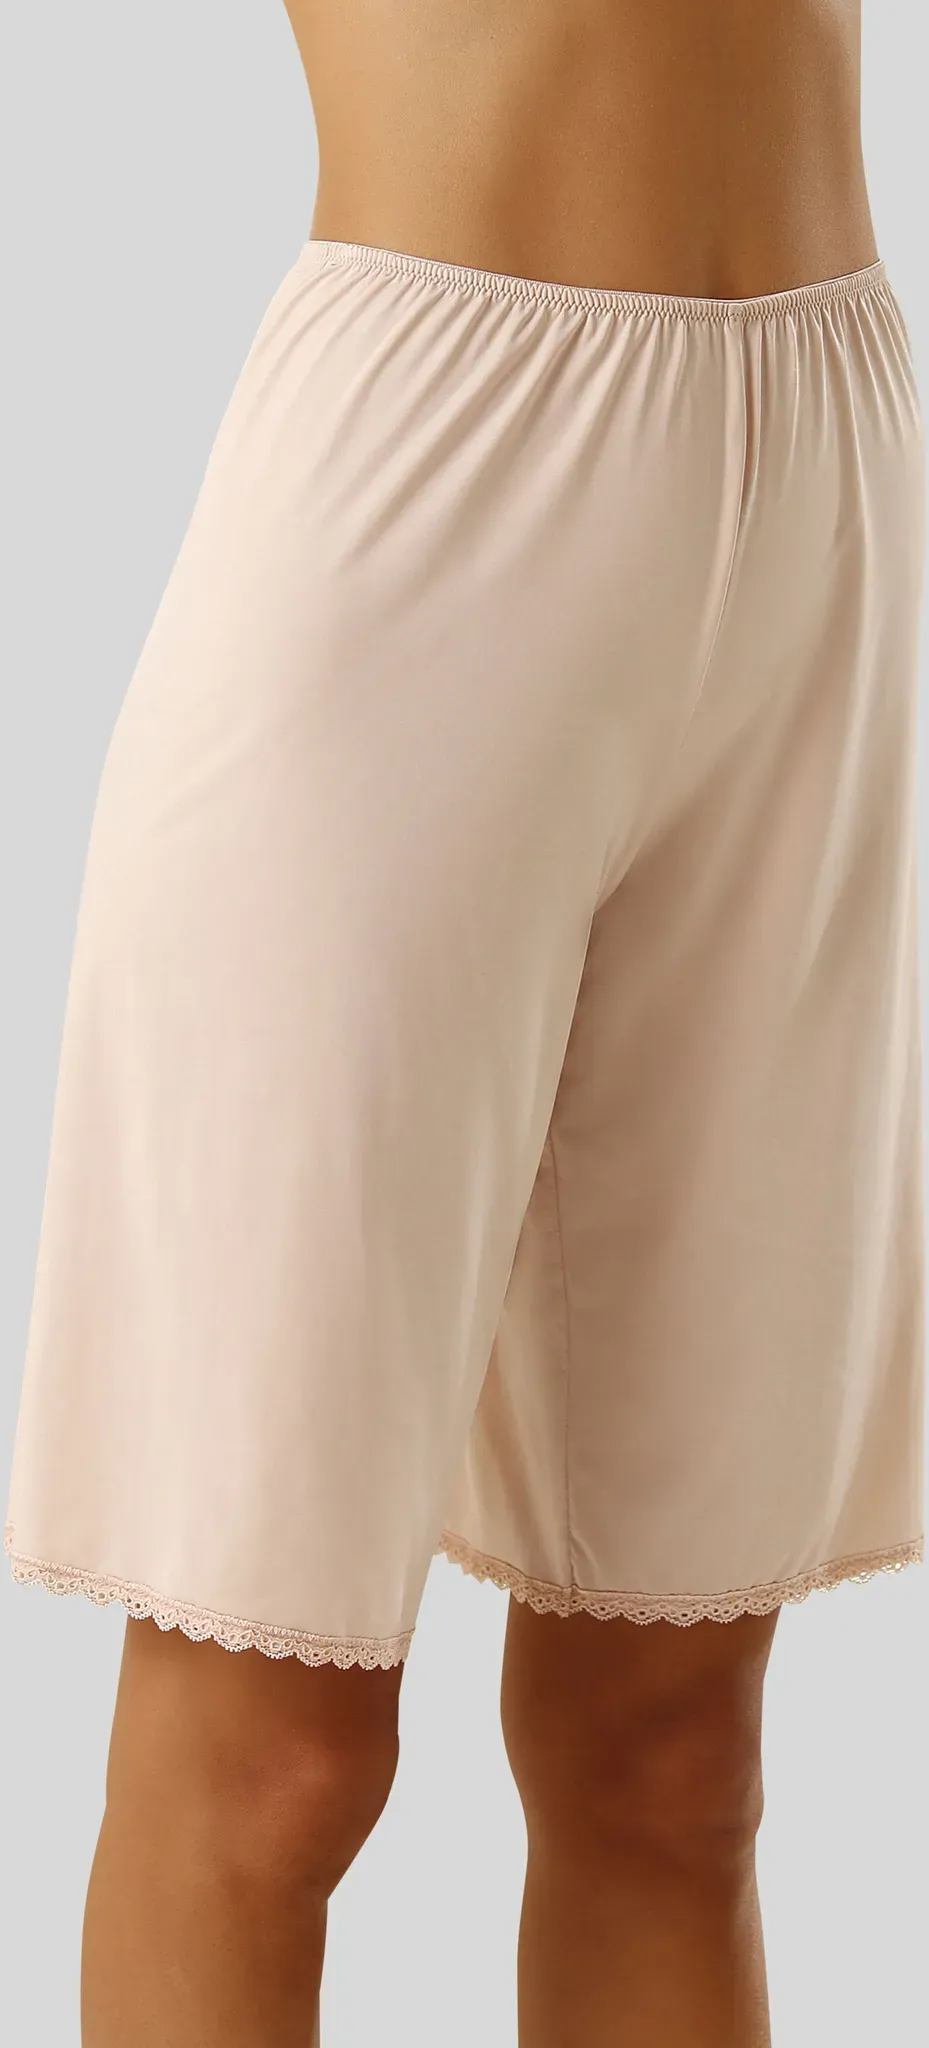 Hosenunterrock NUANCE Gr. 56/58, beige (puder) Damen Unterhosen Nuance aus weich, fließendem Material